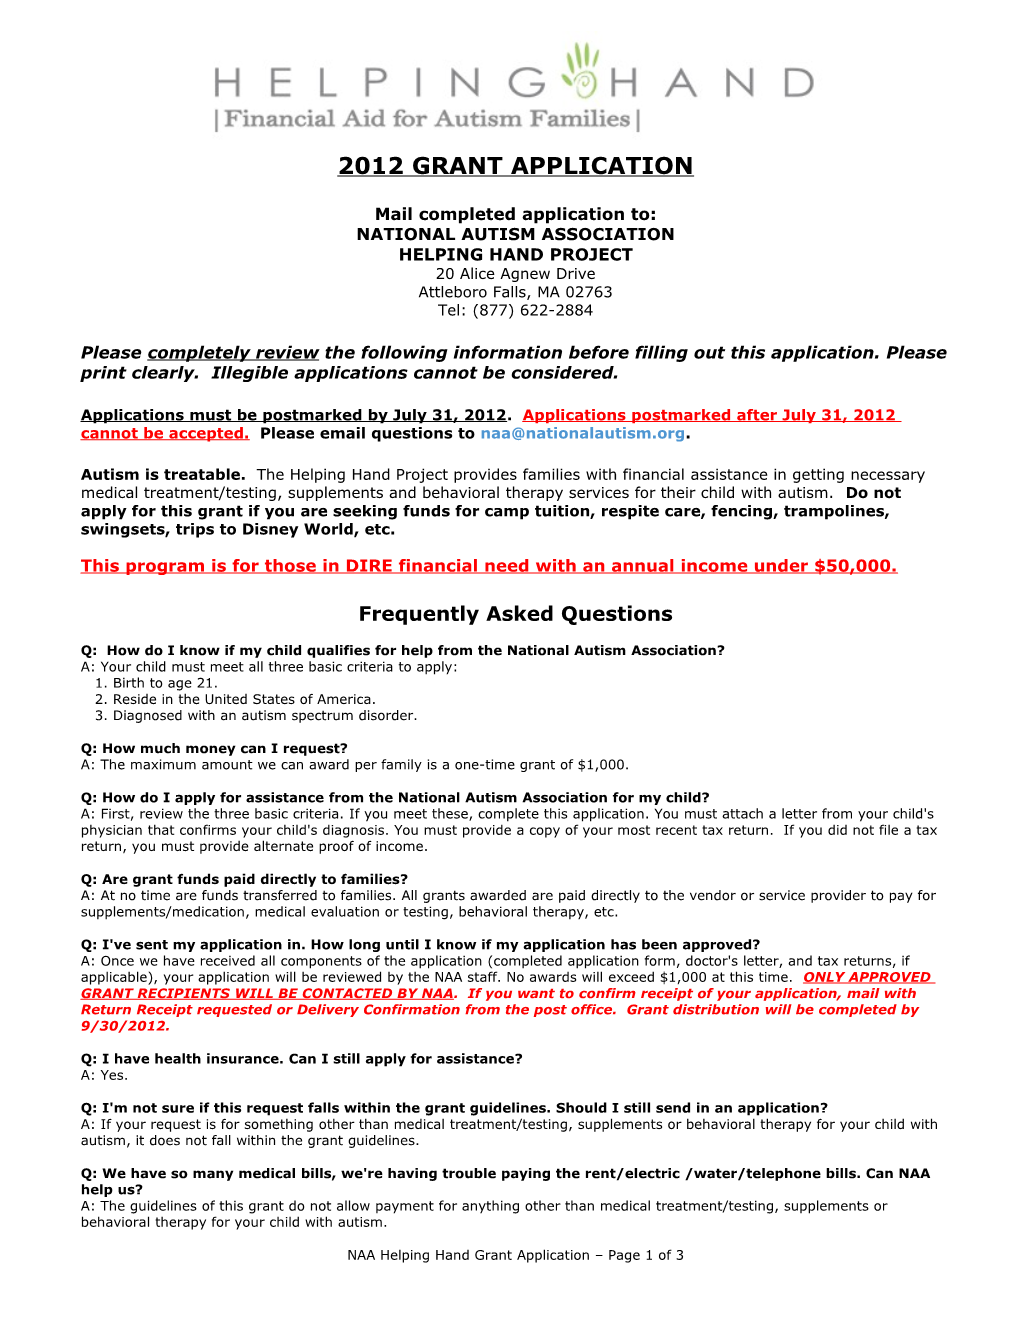 NAA Grant Application